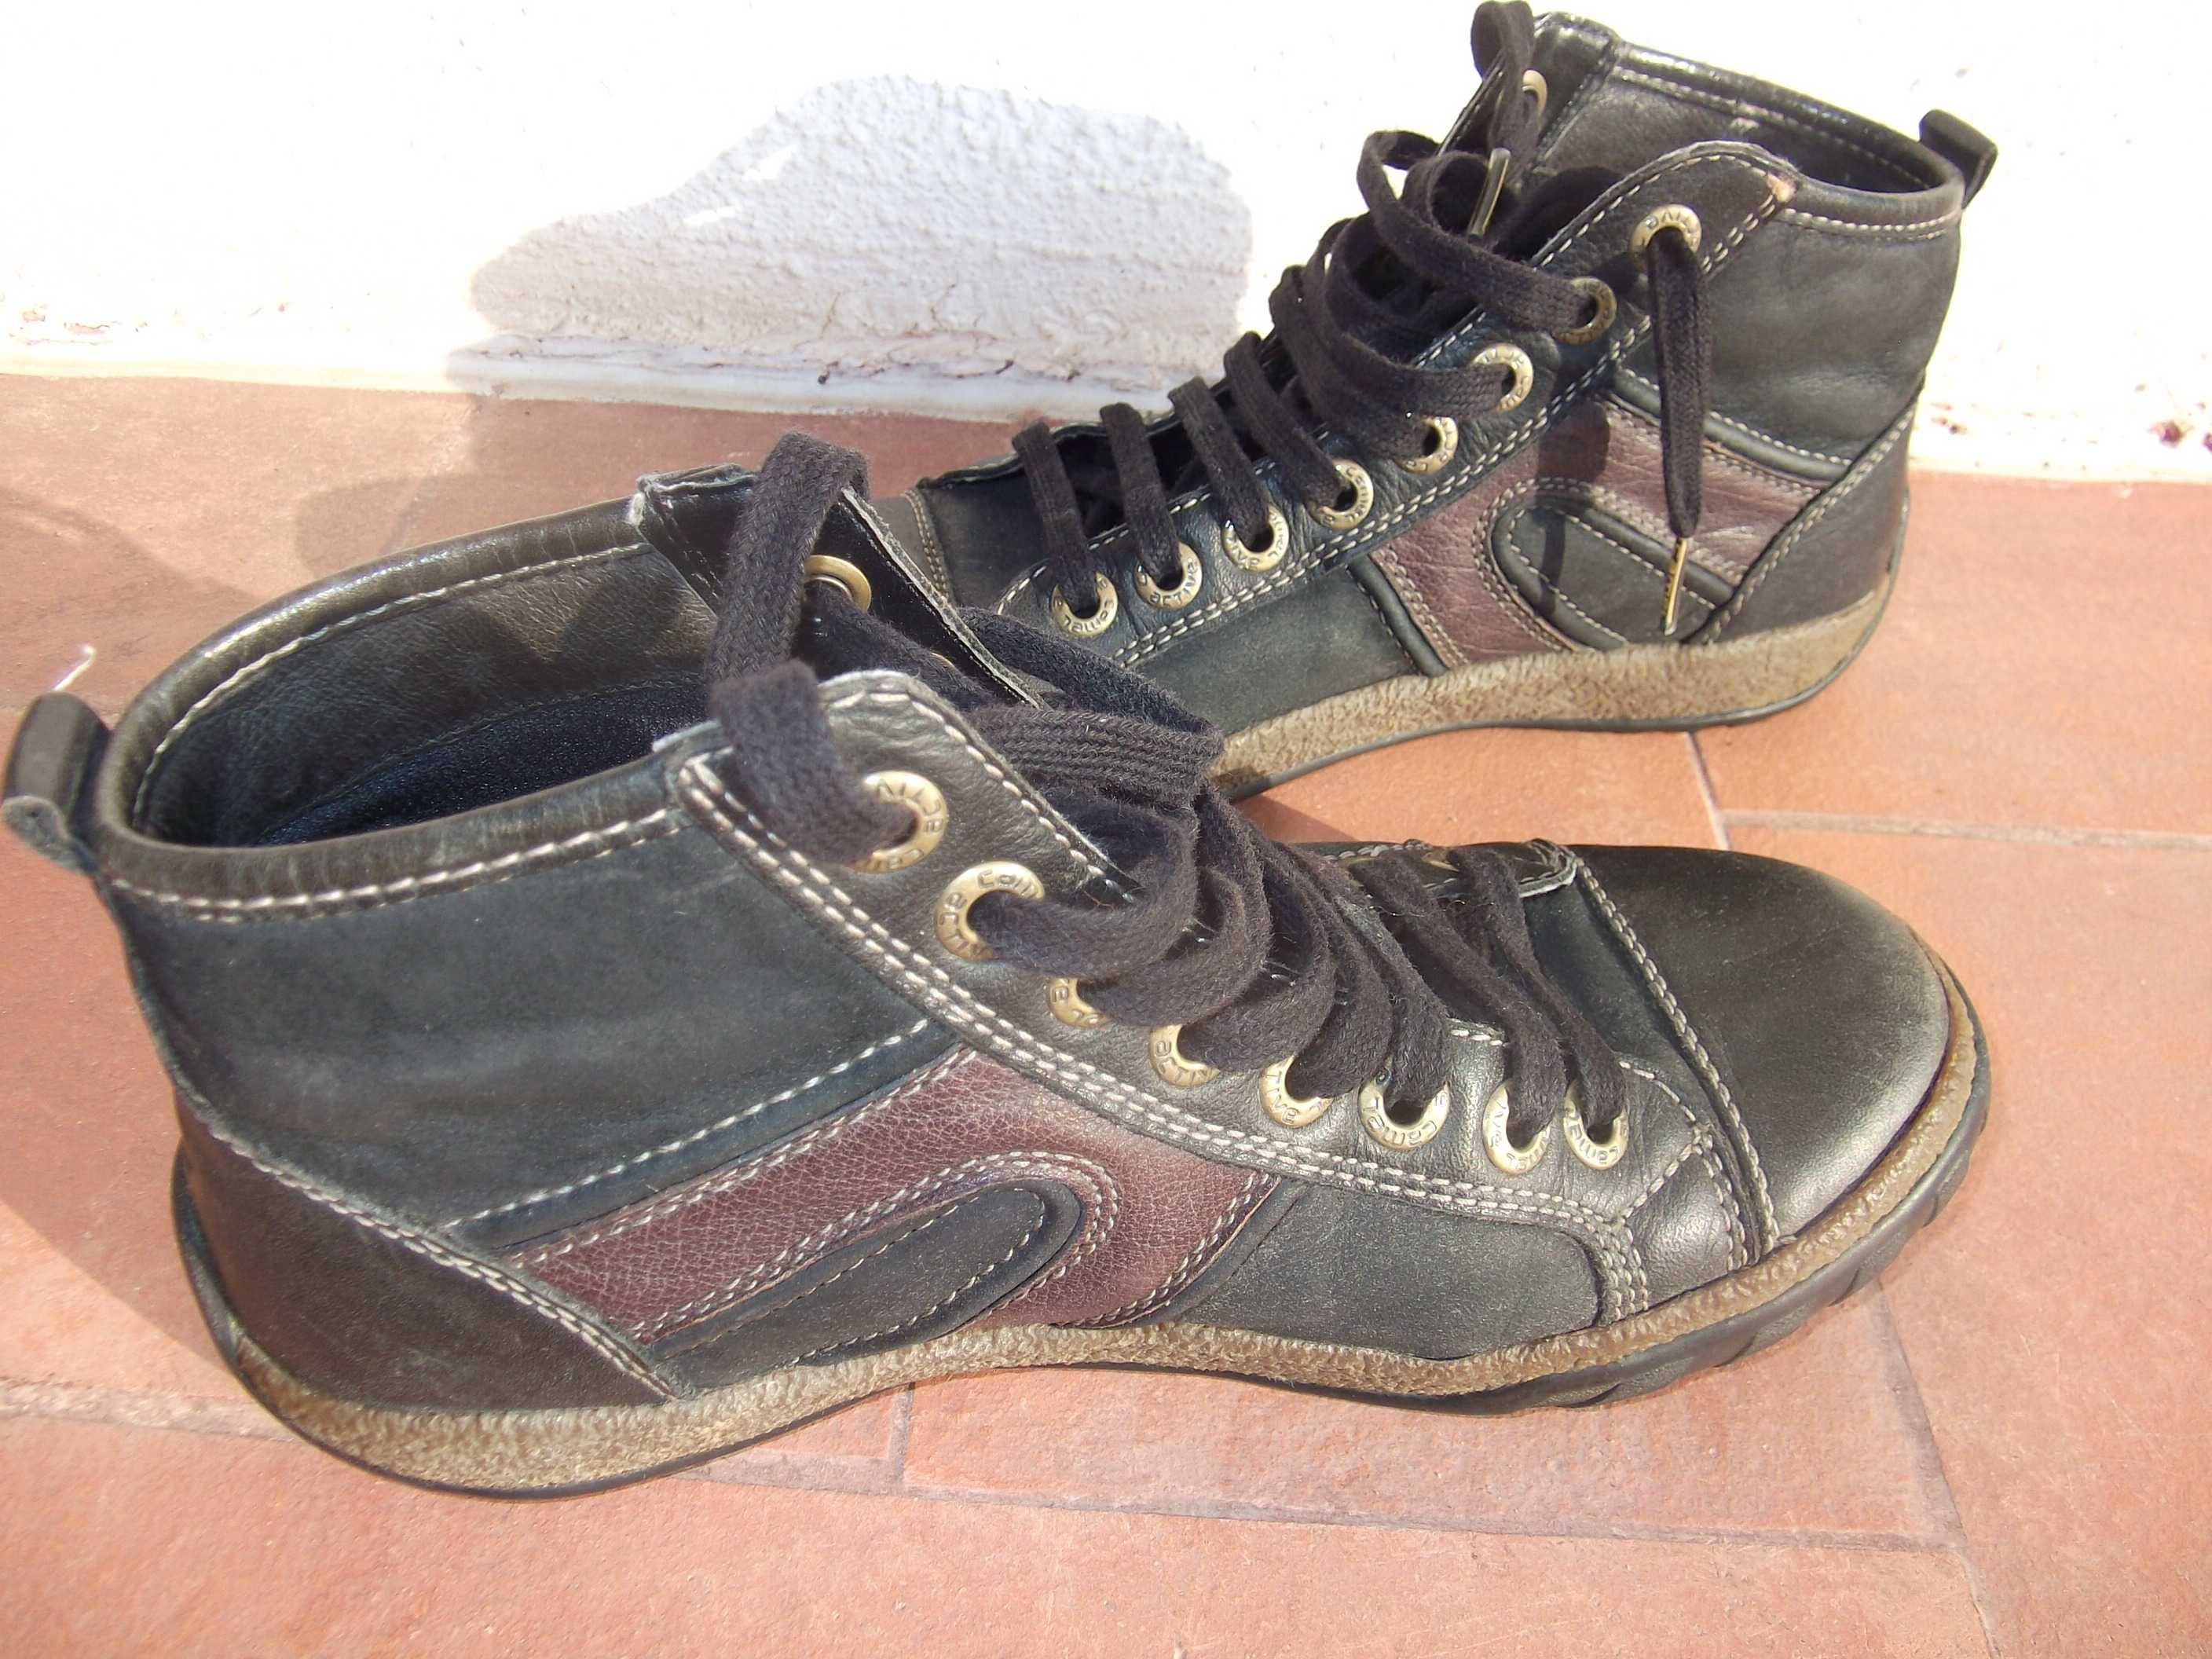 Ténis botins em pele / Leather sneakers boots - CAMEL ACTIVE (n. 37)